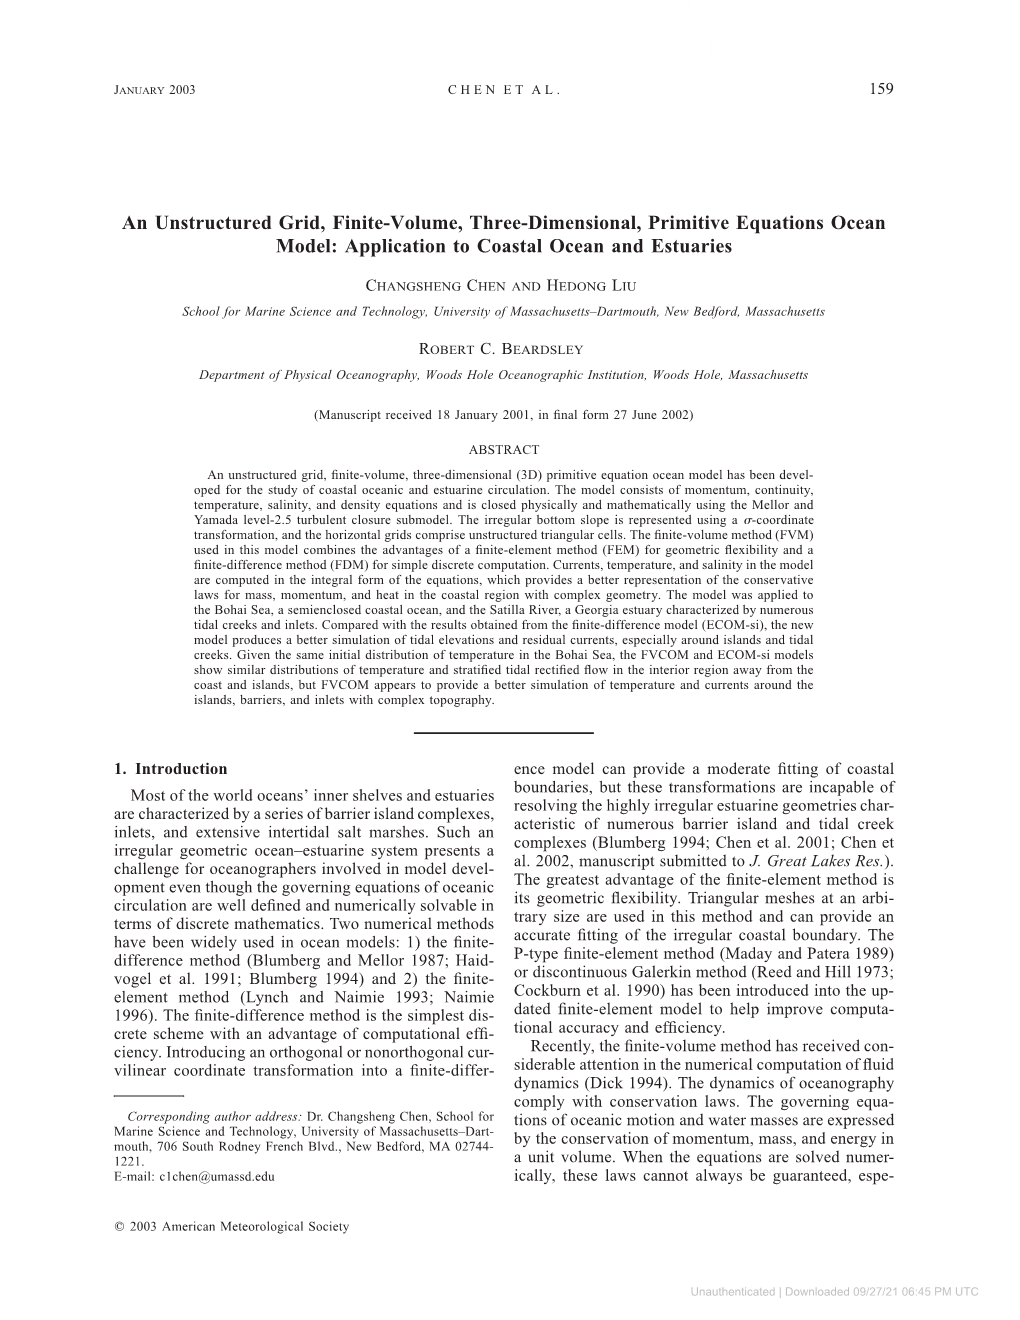 An Unstructured Grid, Finite-Volume, Three-Dimensional, Primitive Equations Ocean Model: Application to Coastal Ocean and Estuaries